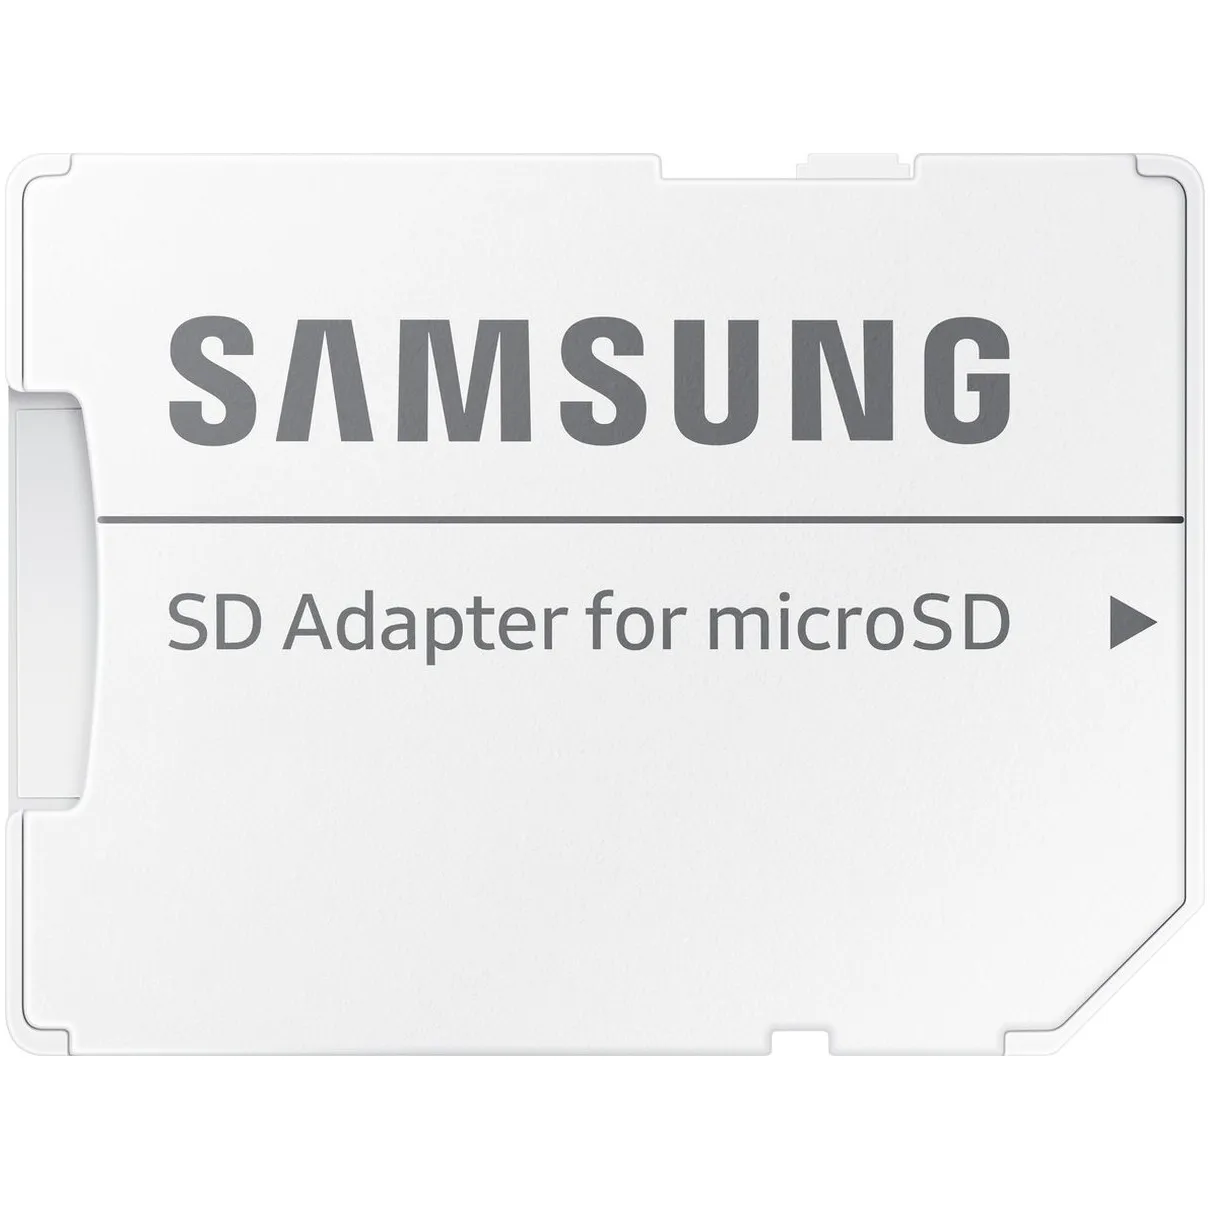 Samsung PRO Plus 512GB (2023) microSDXC + SD Adapter